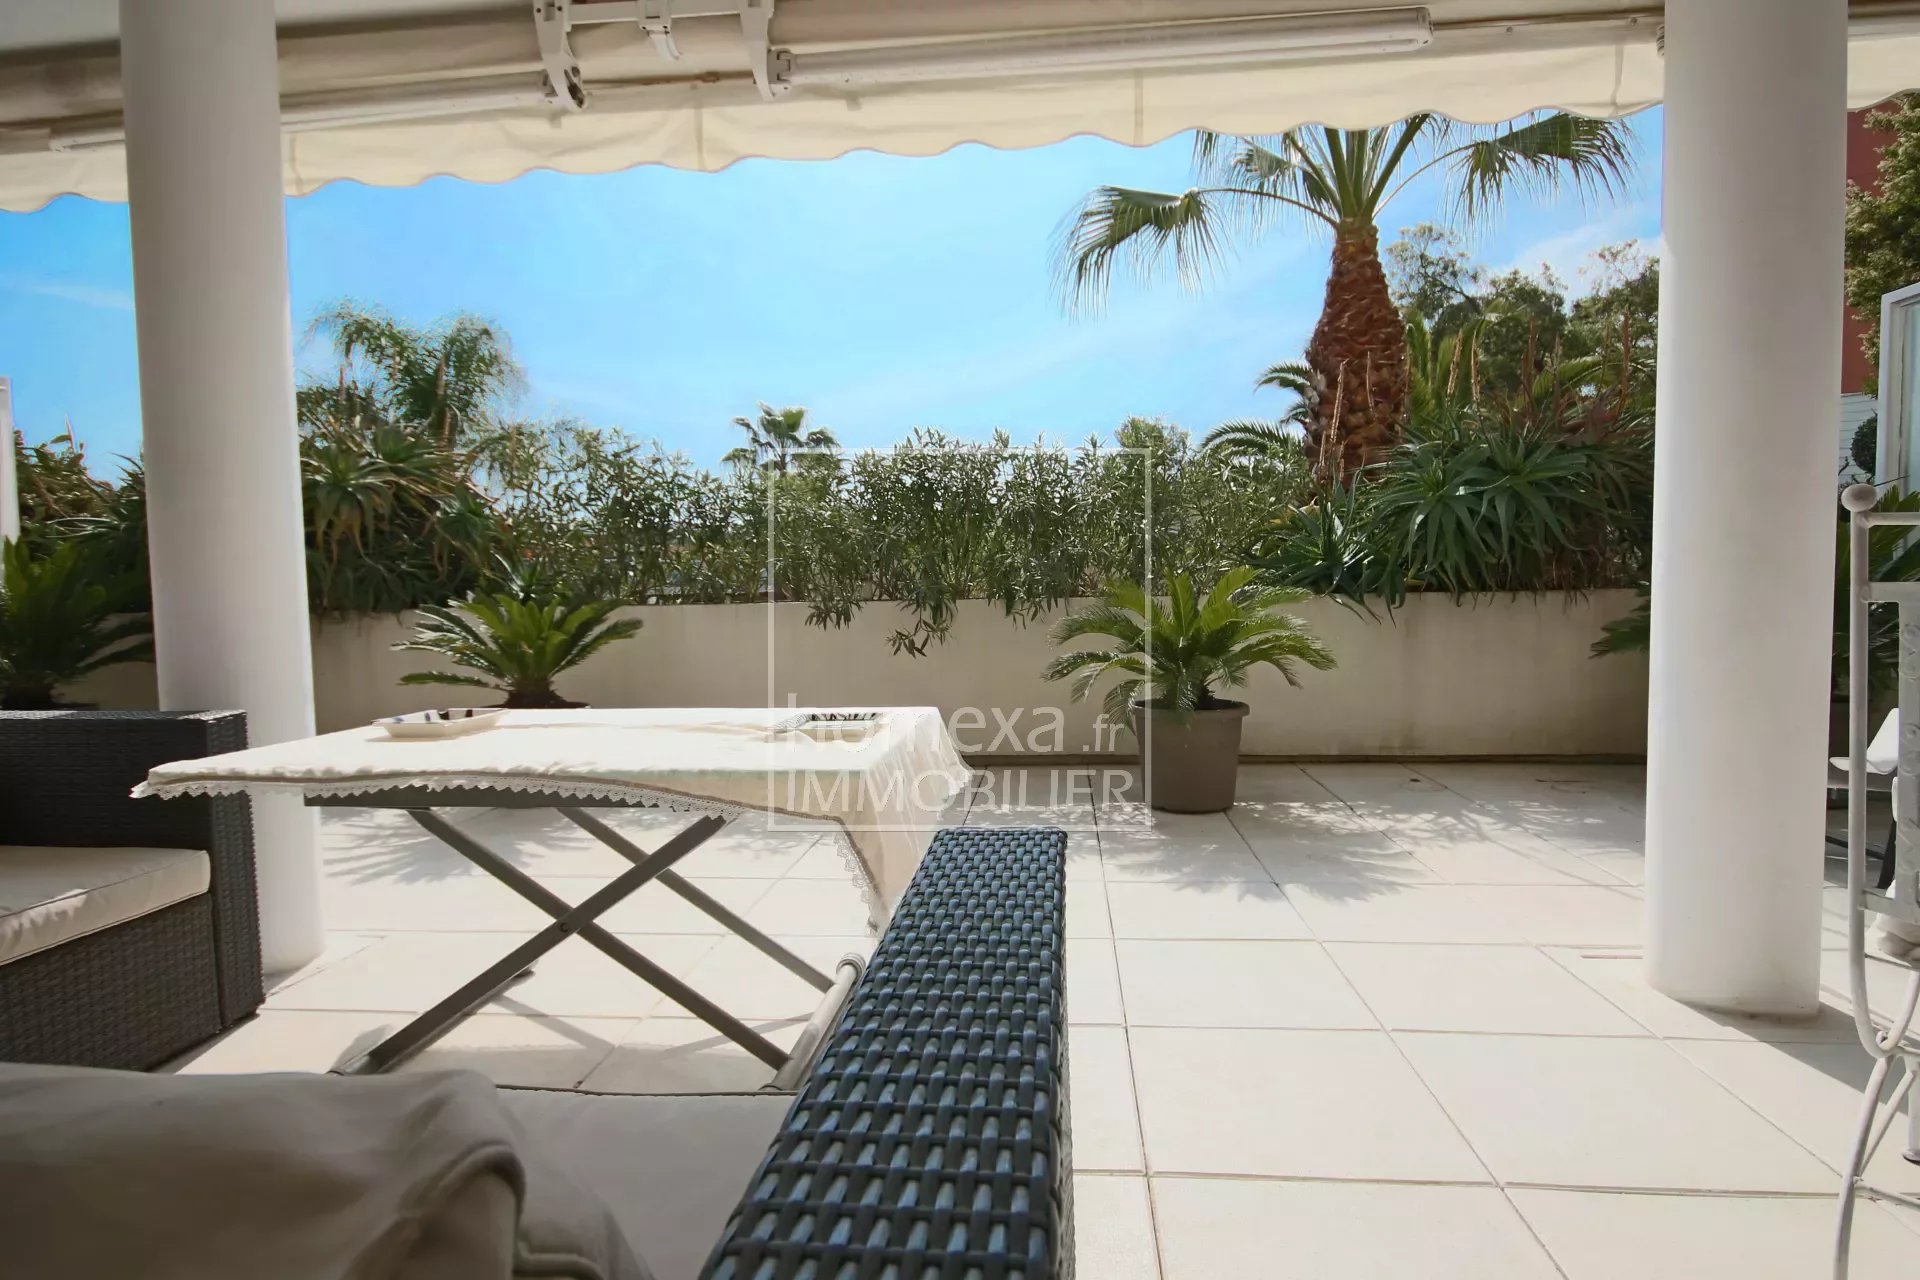 Apartment for sale in Cannes La Bocca : Terrace view